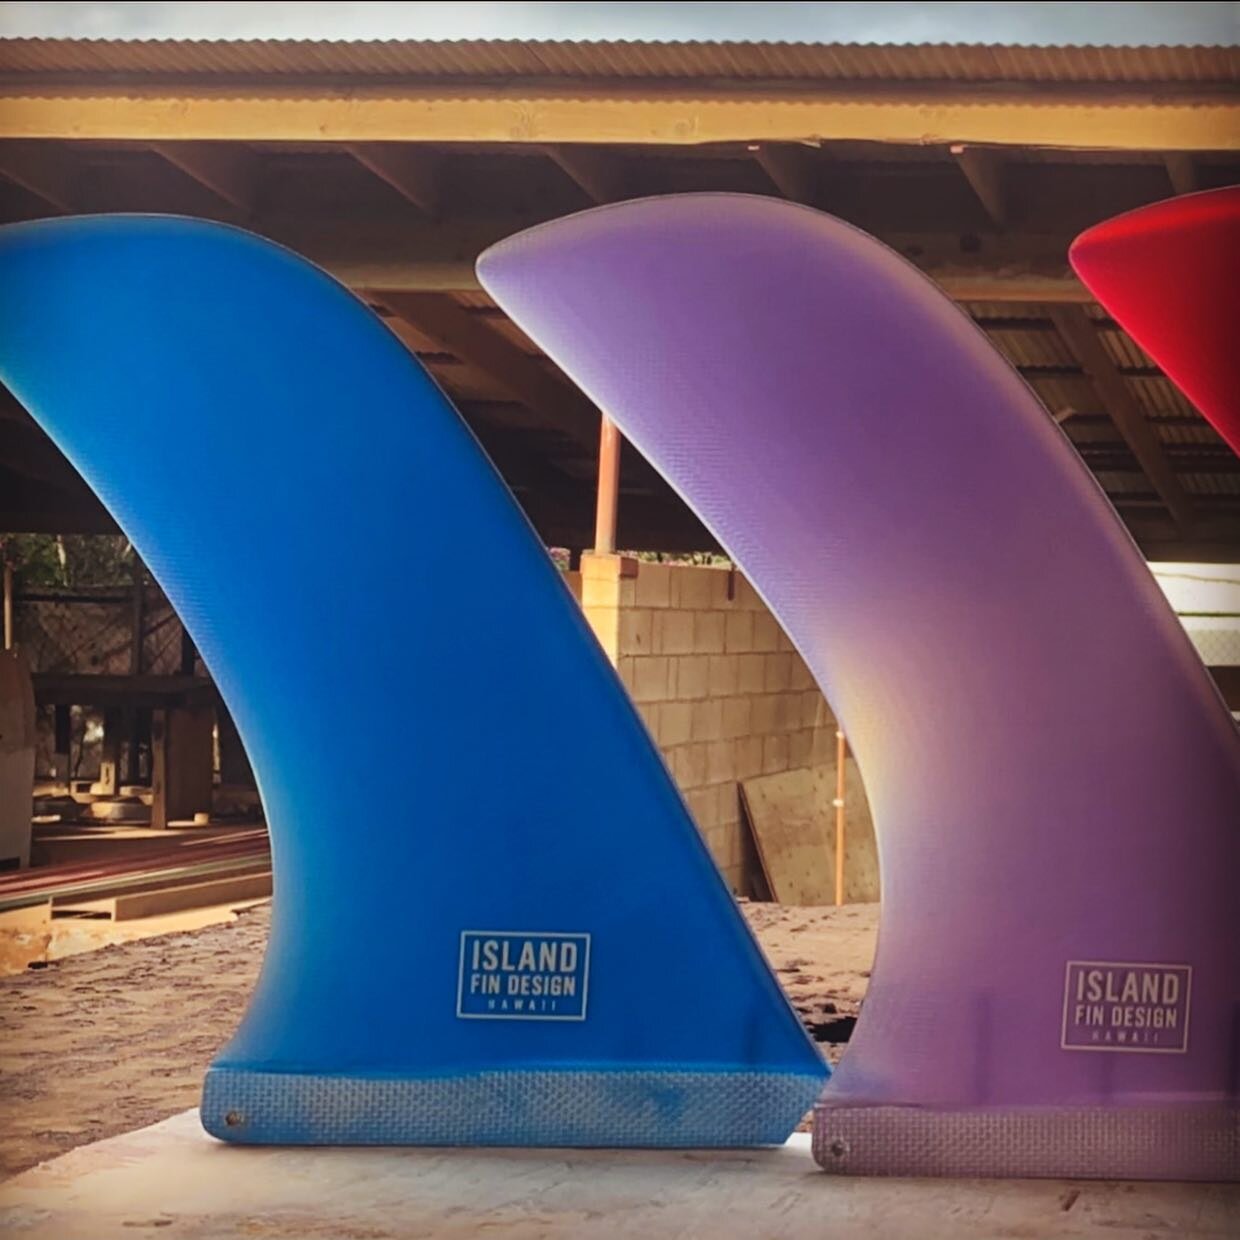 Fiberglass Hawaii -Maui Store restock.
.
.
.
#surfboardfins #tints #islandfindesign #maui